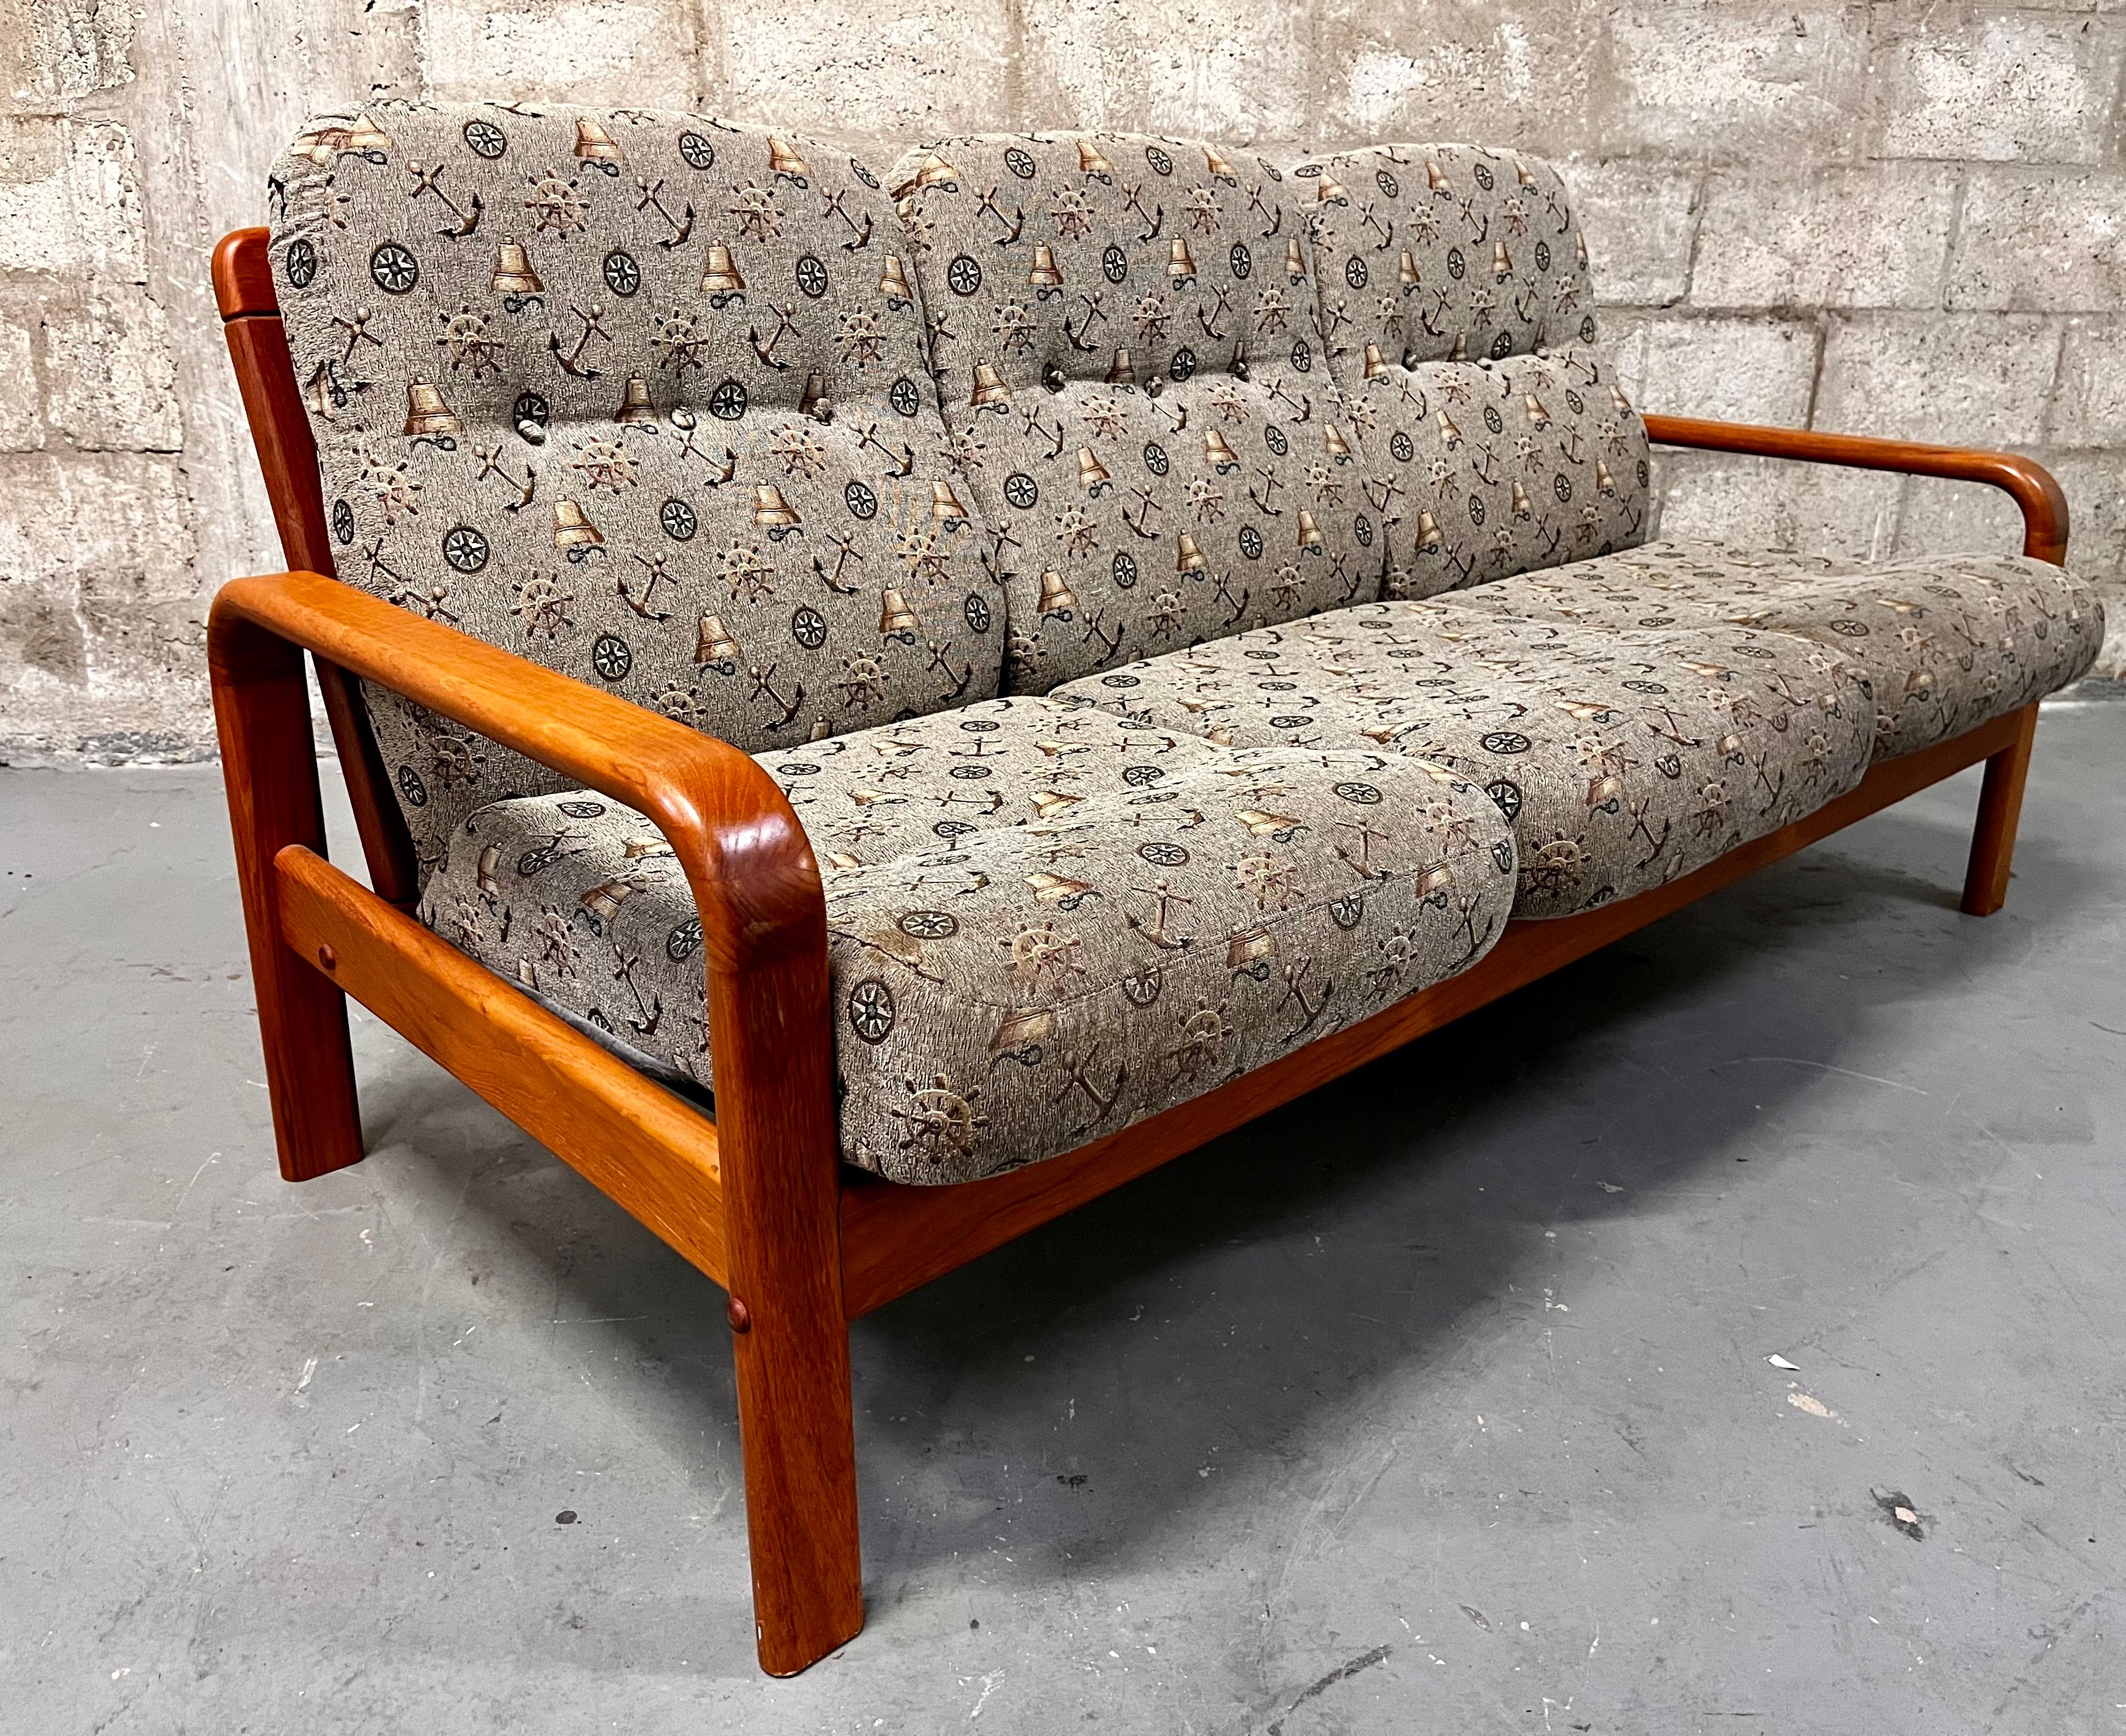 Upholstery Mid-Century Modern Danish 3 Seats Teak Sofa by Nitex Mobler Denmark, C 1980s For Sale